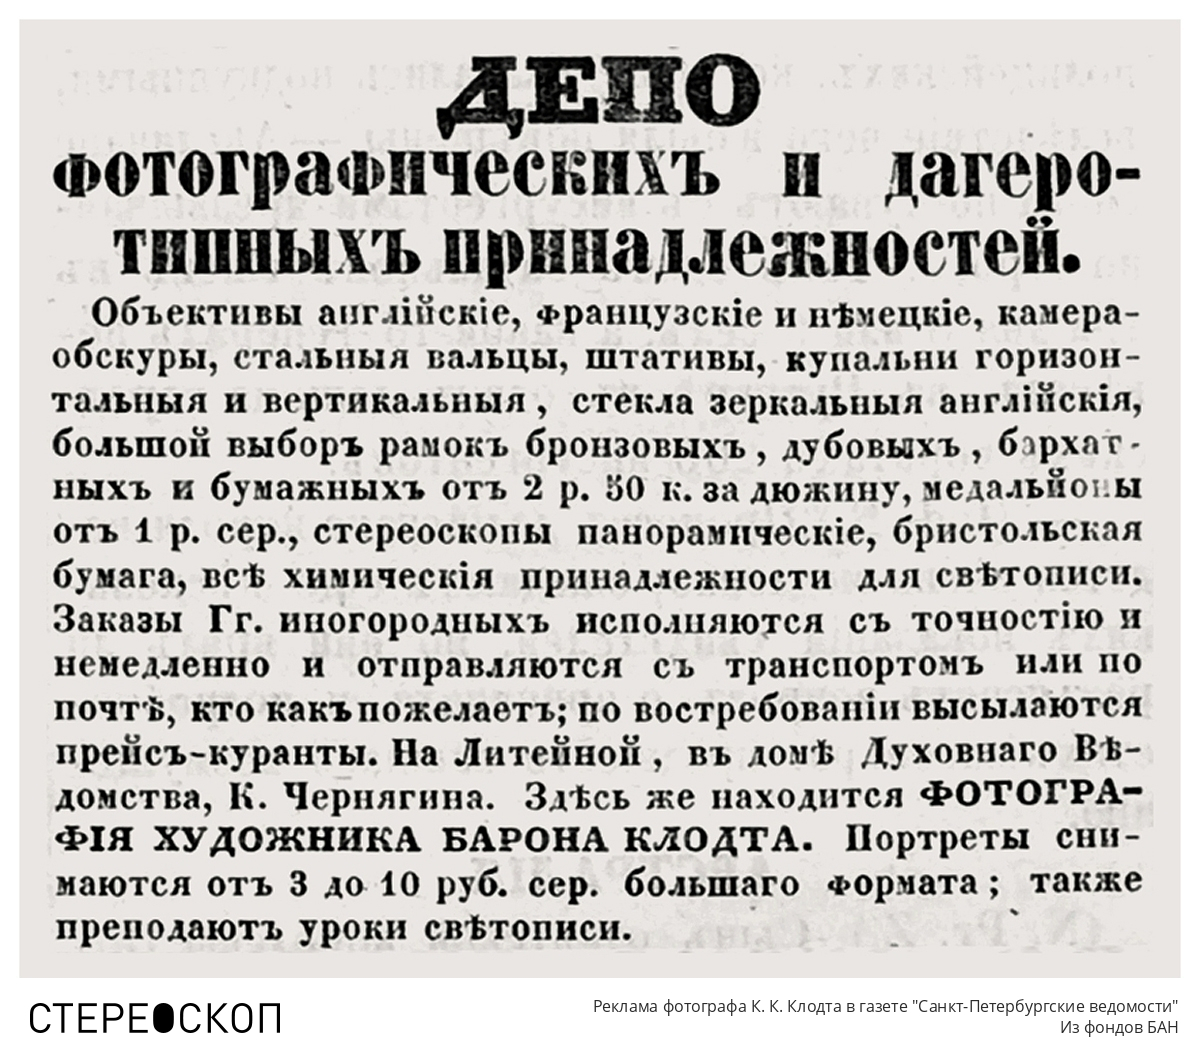 Реклама фотографа Константина Карловича Клодта в газете "Санкт-Петербургские ведомости"